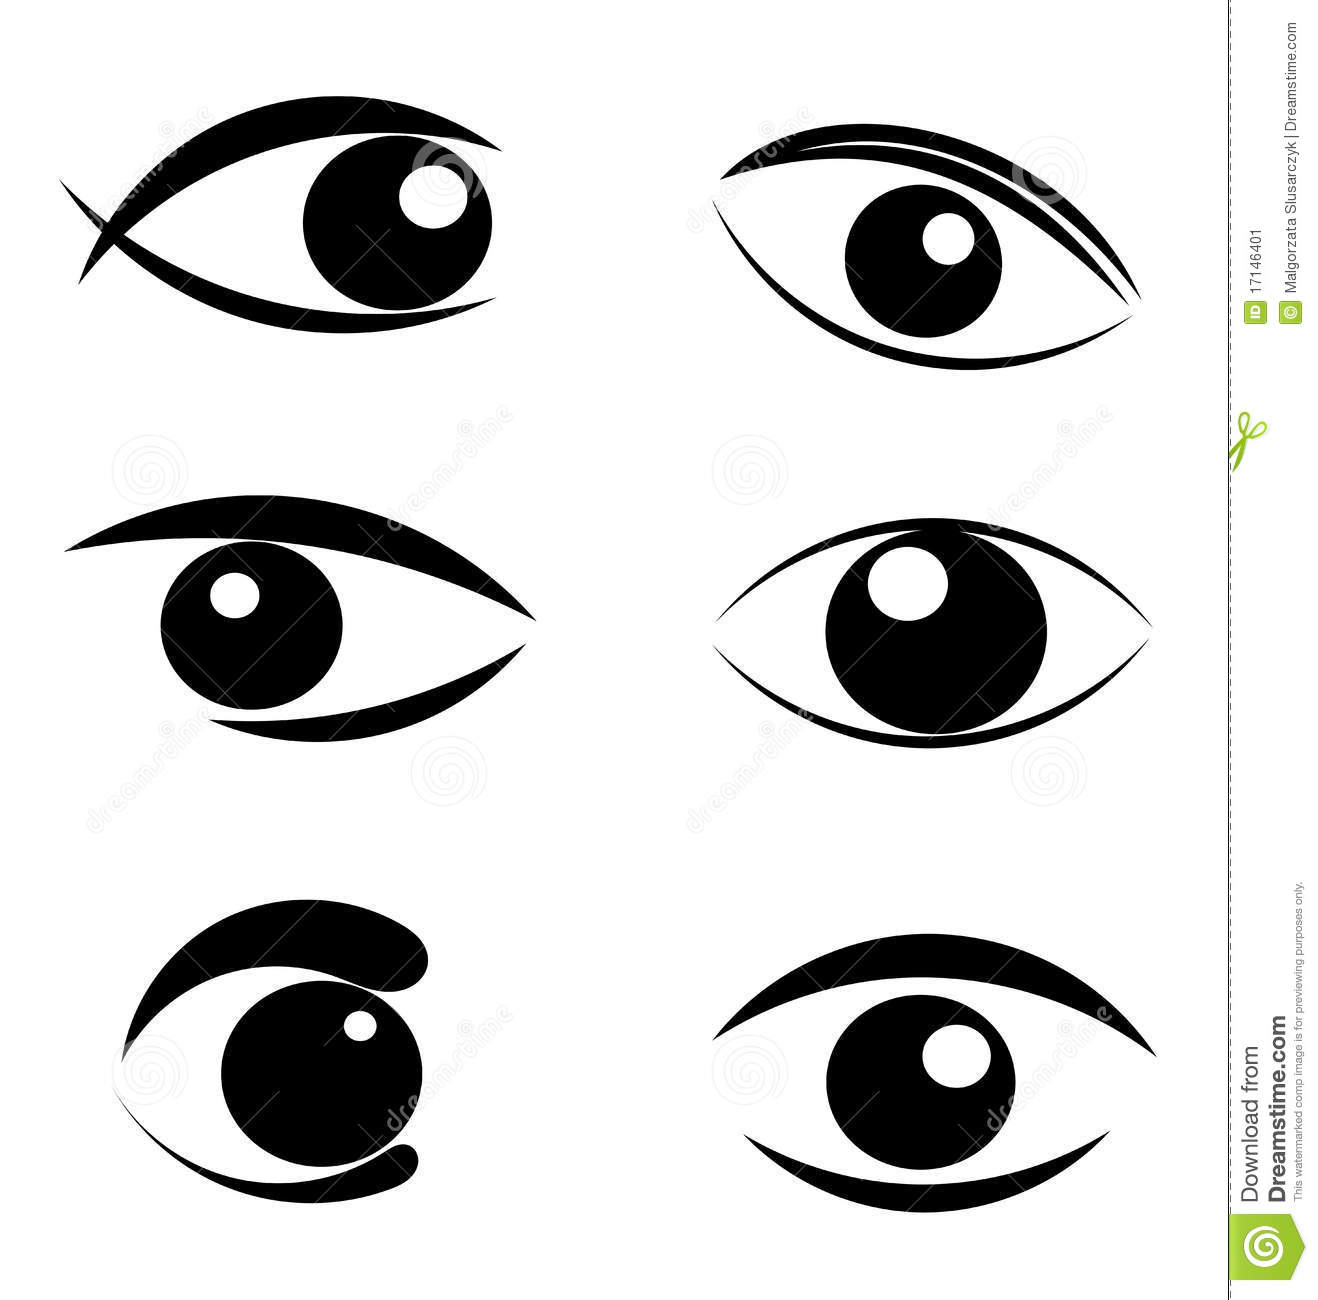 More Similar Stock Images Of   Set Of Eyes Symbols